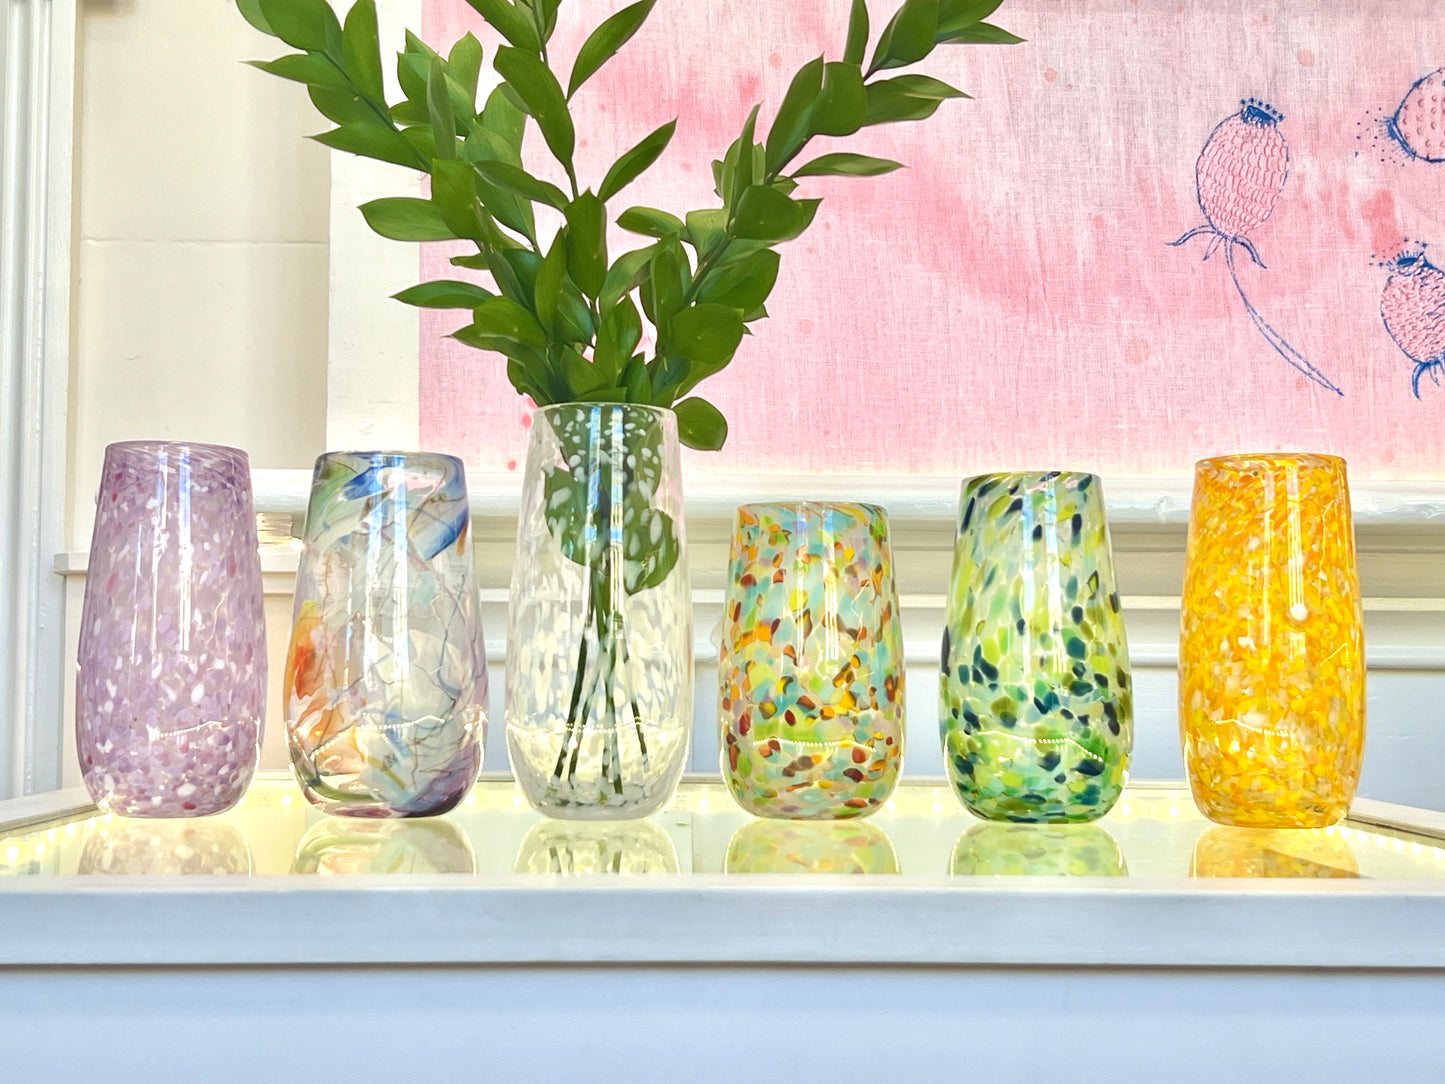 Handblown Glass Cylinder Vase - White Speckle (April 24)